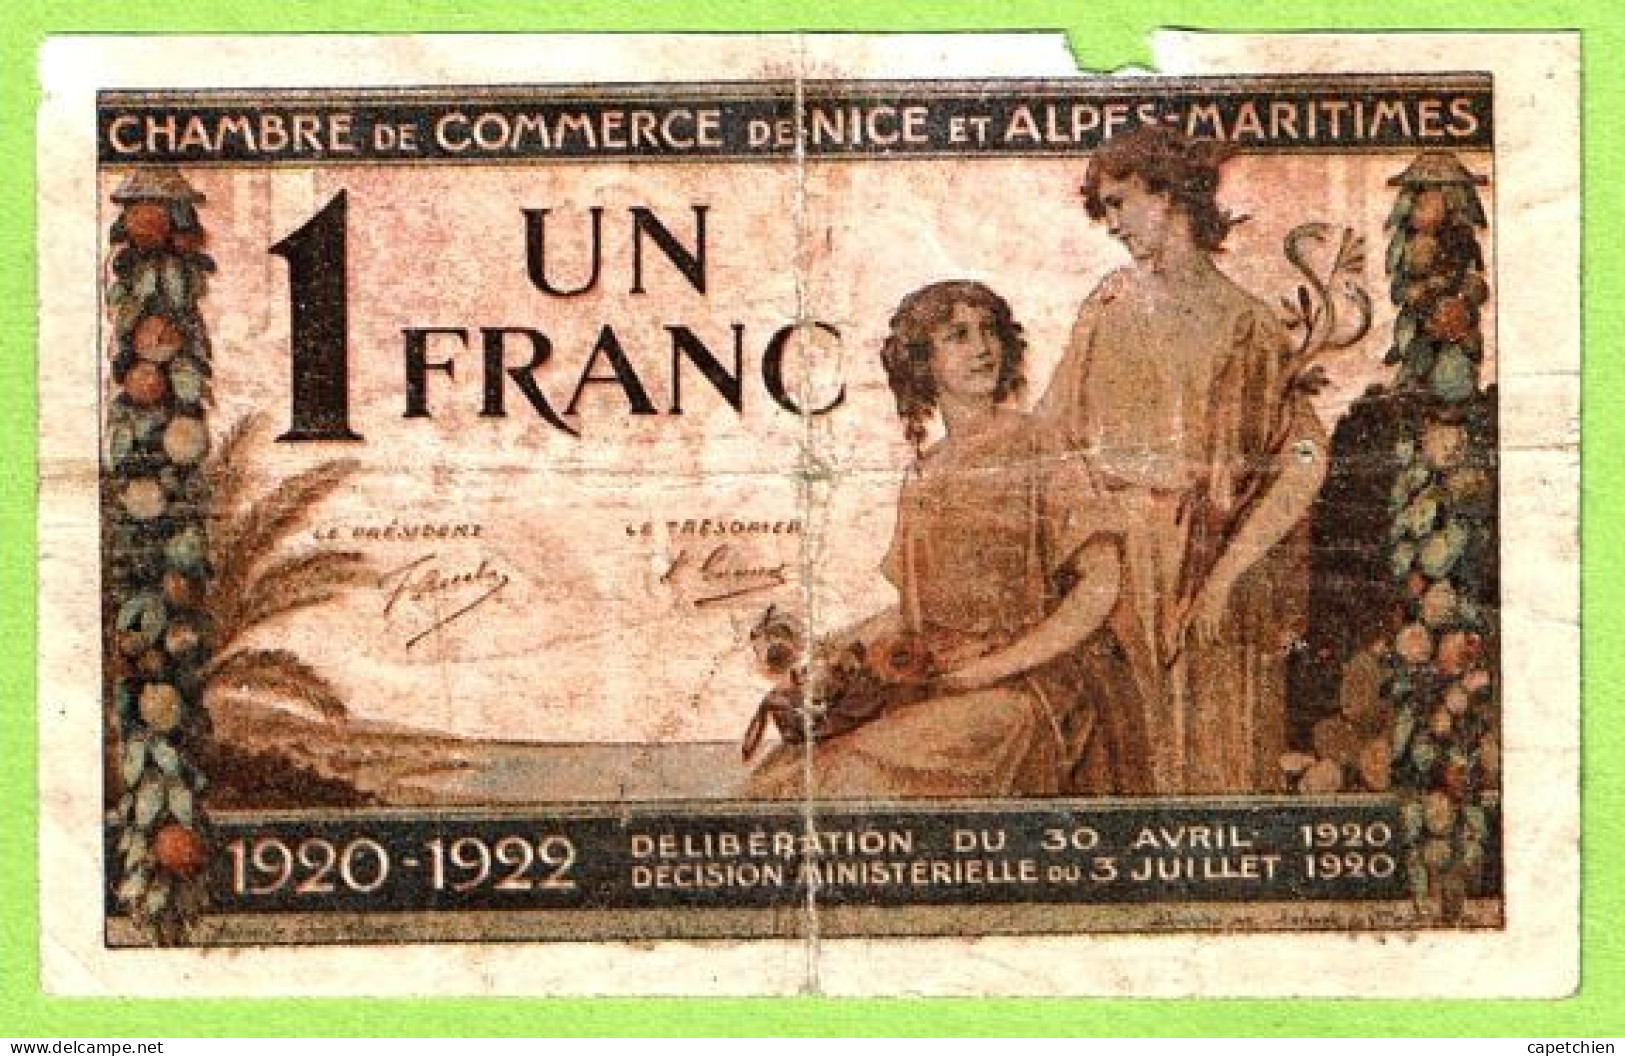 FRANCE / CHAMBRE De COMMERCE / NICE - ALPES MARITIMES / 1 FRANC / 30 AVRIL 1920 / N° 0.023.744 / SERIE 110 - Camera Di Commercio